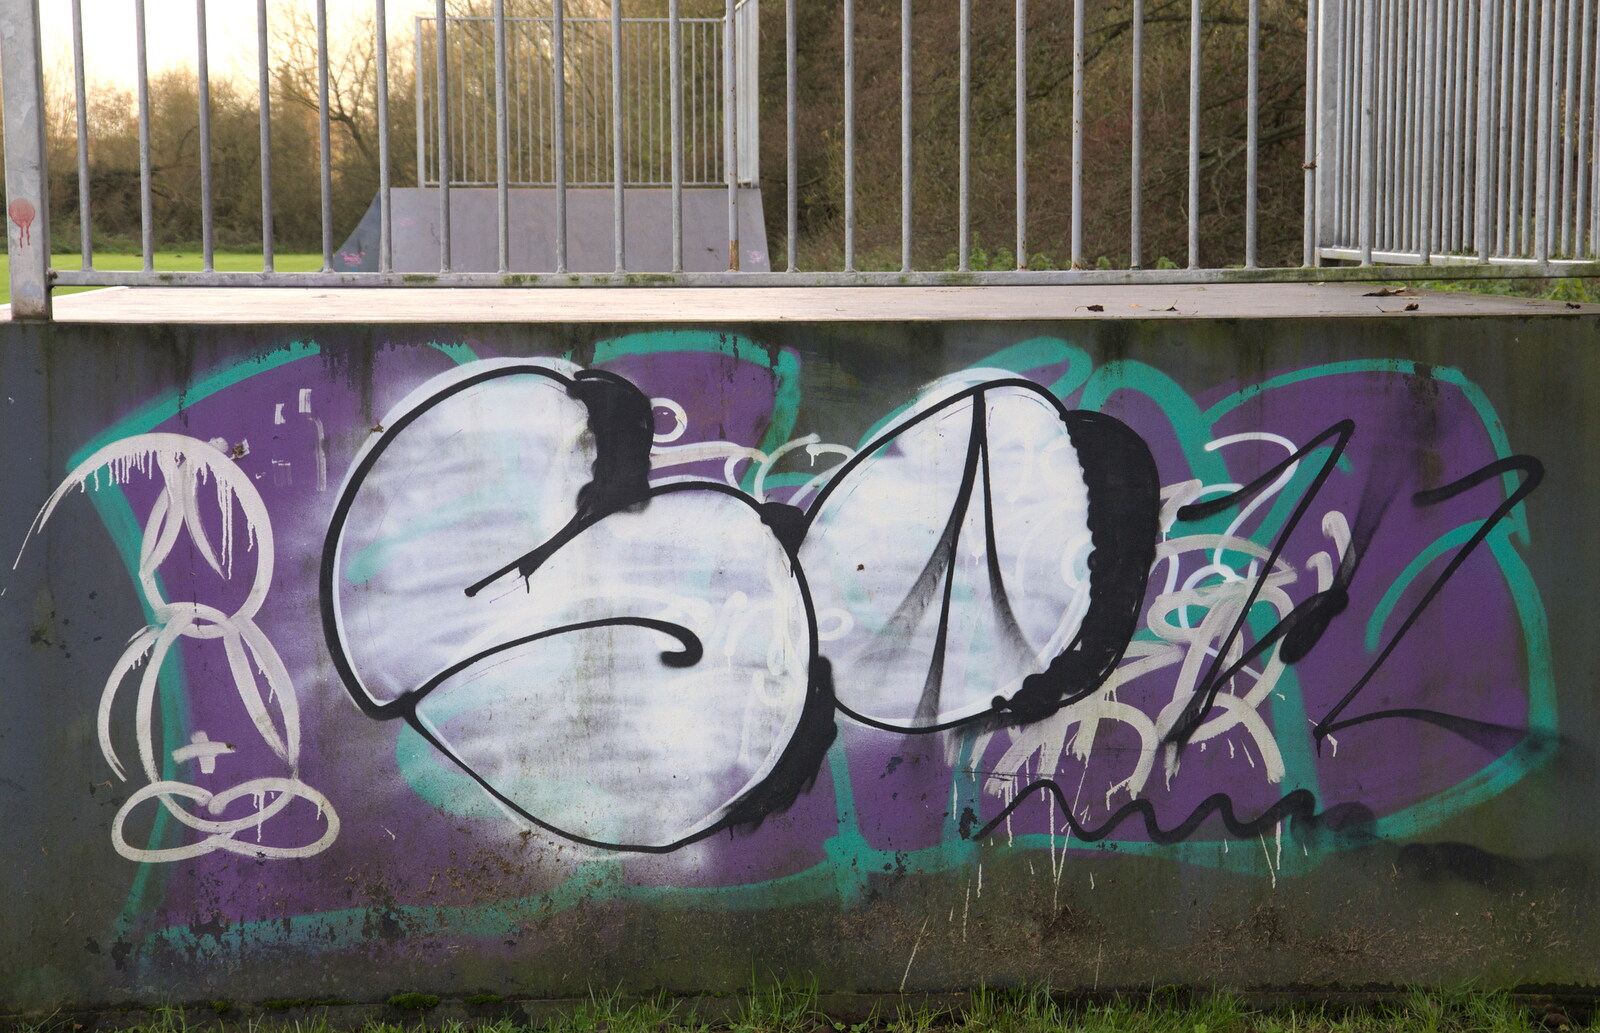 Skater graffiti from A Walk Around Eye, Suffolk - 19th November 2017